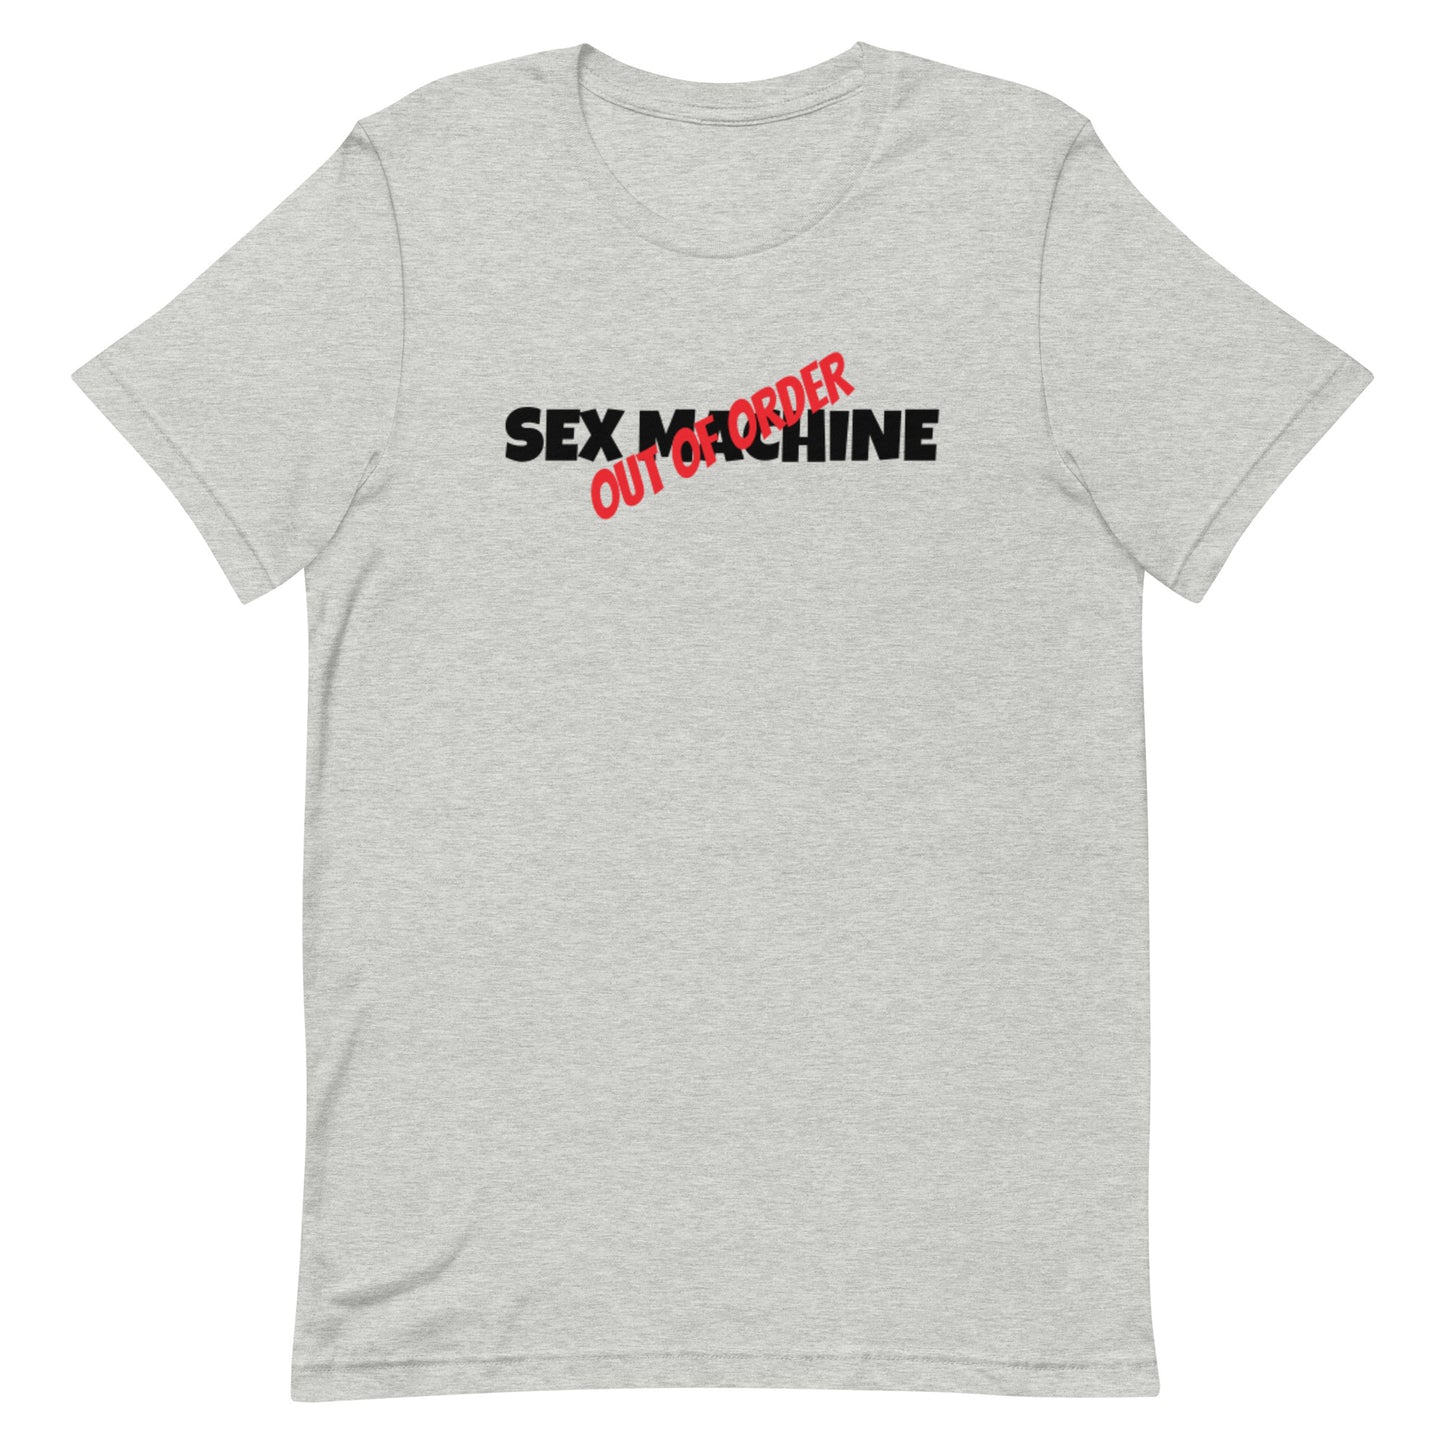 Broken sex machine